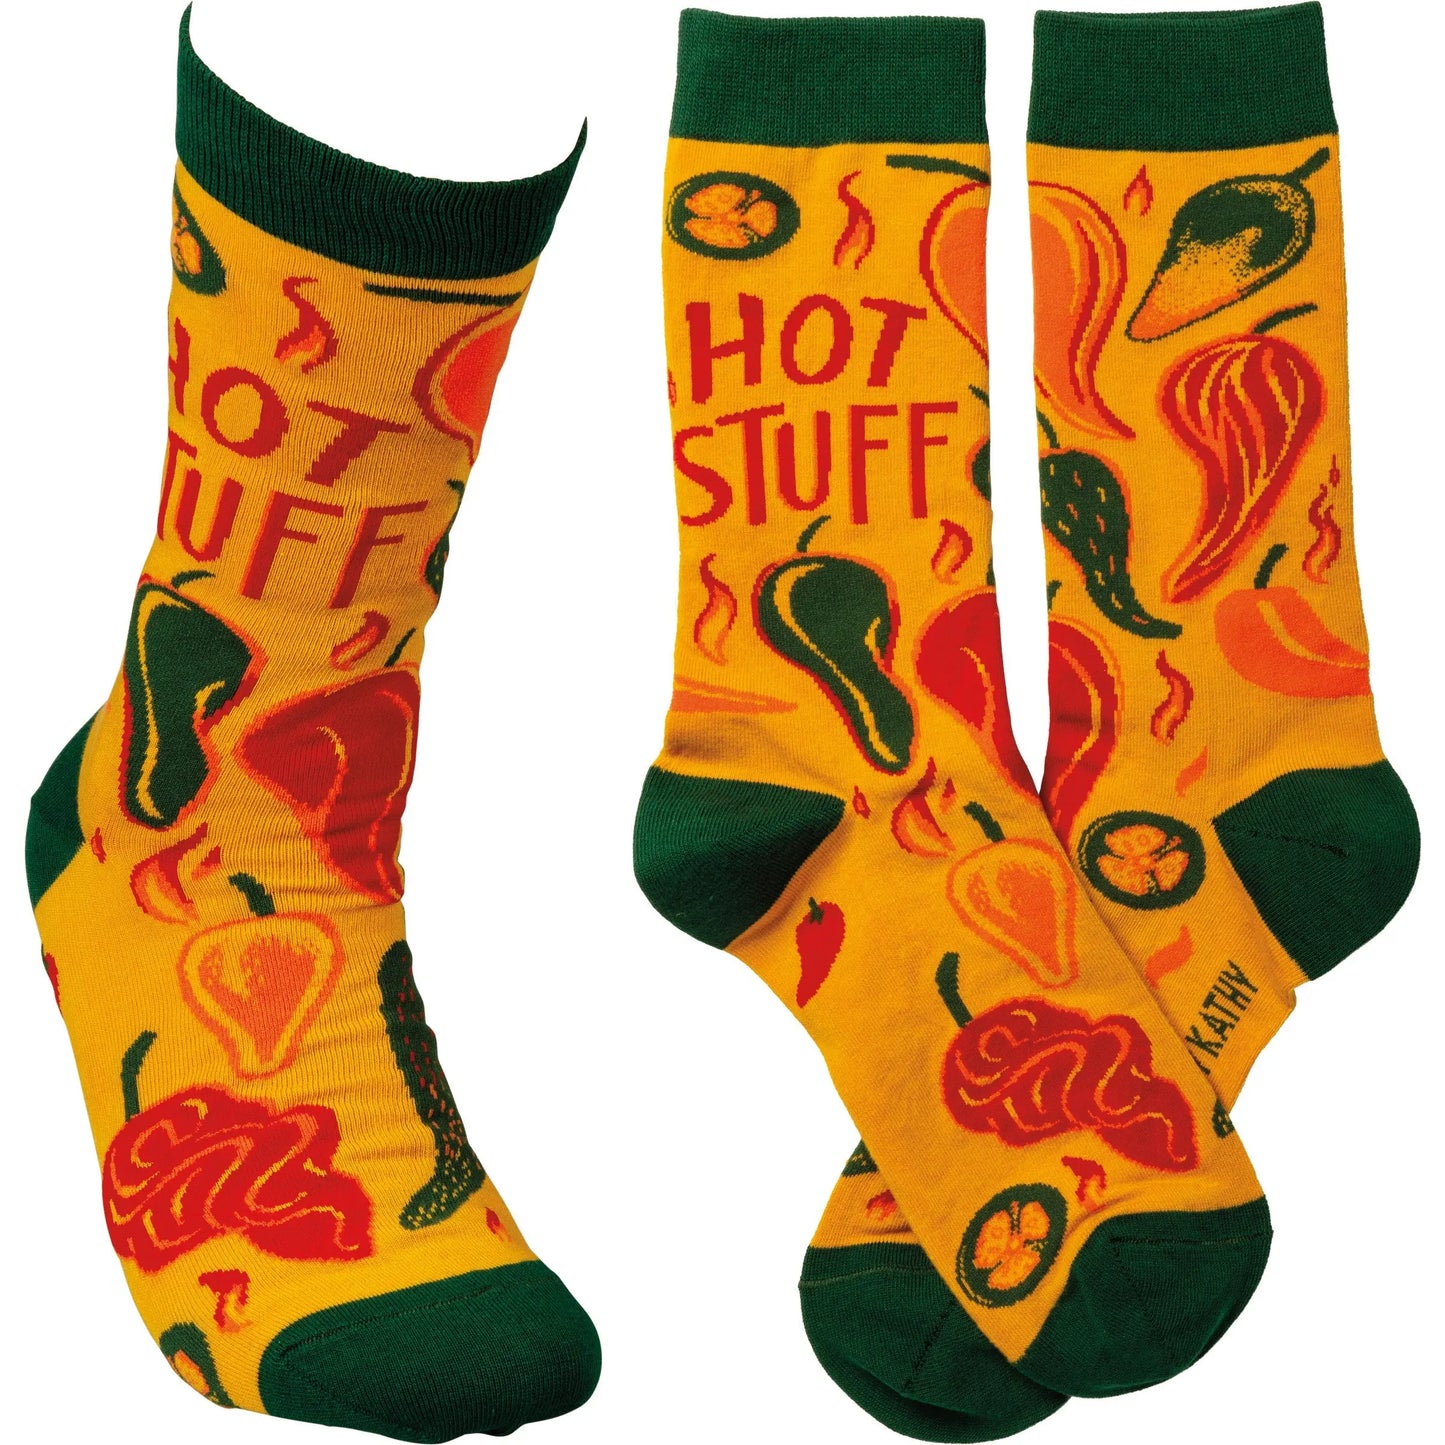 Primitives By Kathy - "Hot Stuff" Socks PRIMITIVES BY KATHY